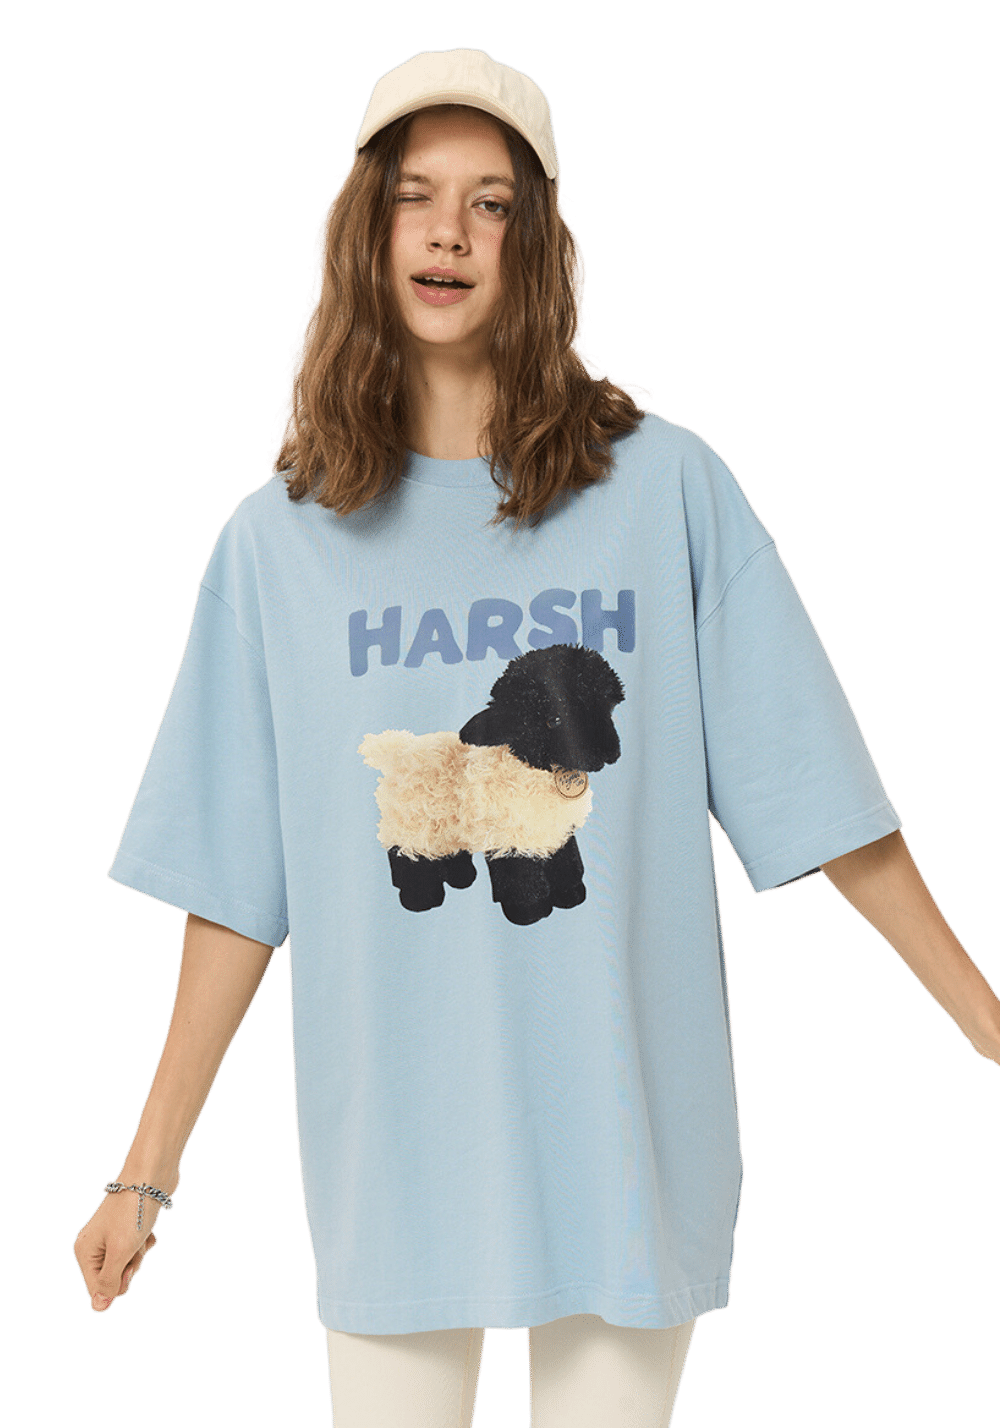 Cartoon Little Black Sheep T-shirt - PSYLOS 1, Cartoon Little Black Sheep T-shirt, T-Shirt, HARSH AND CRUEL, PSYLOS 1